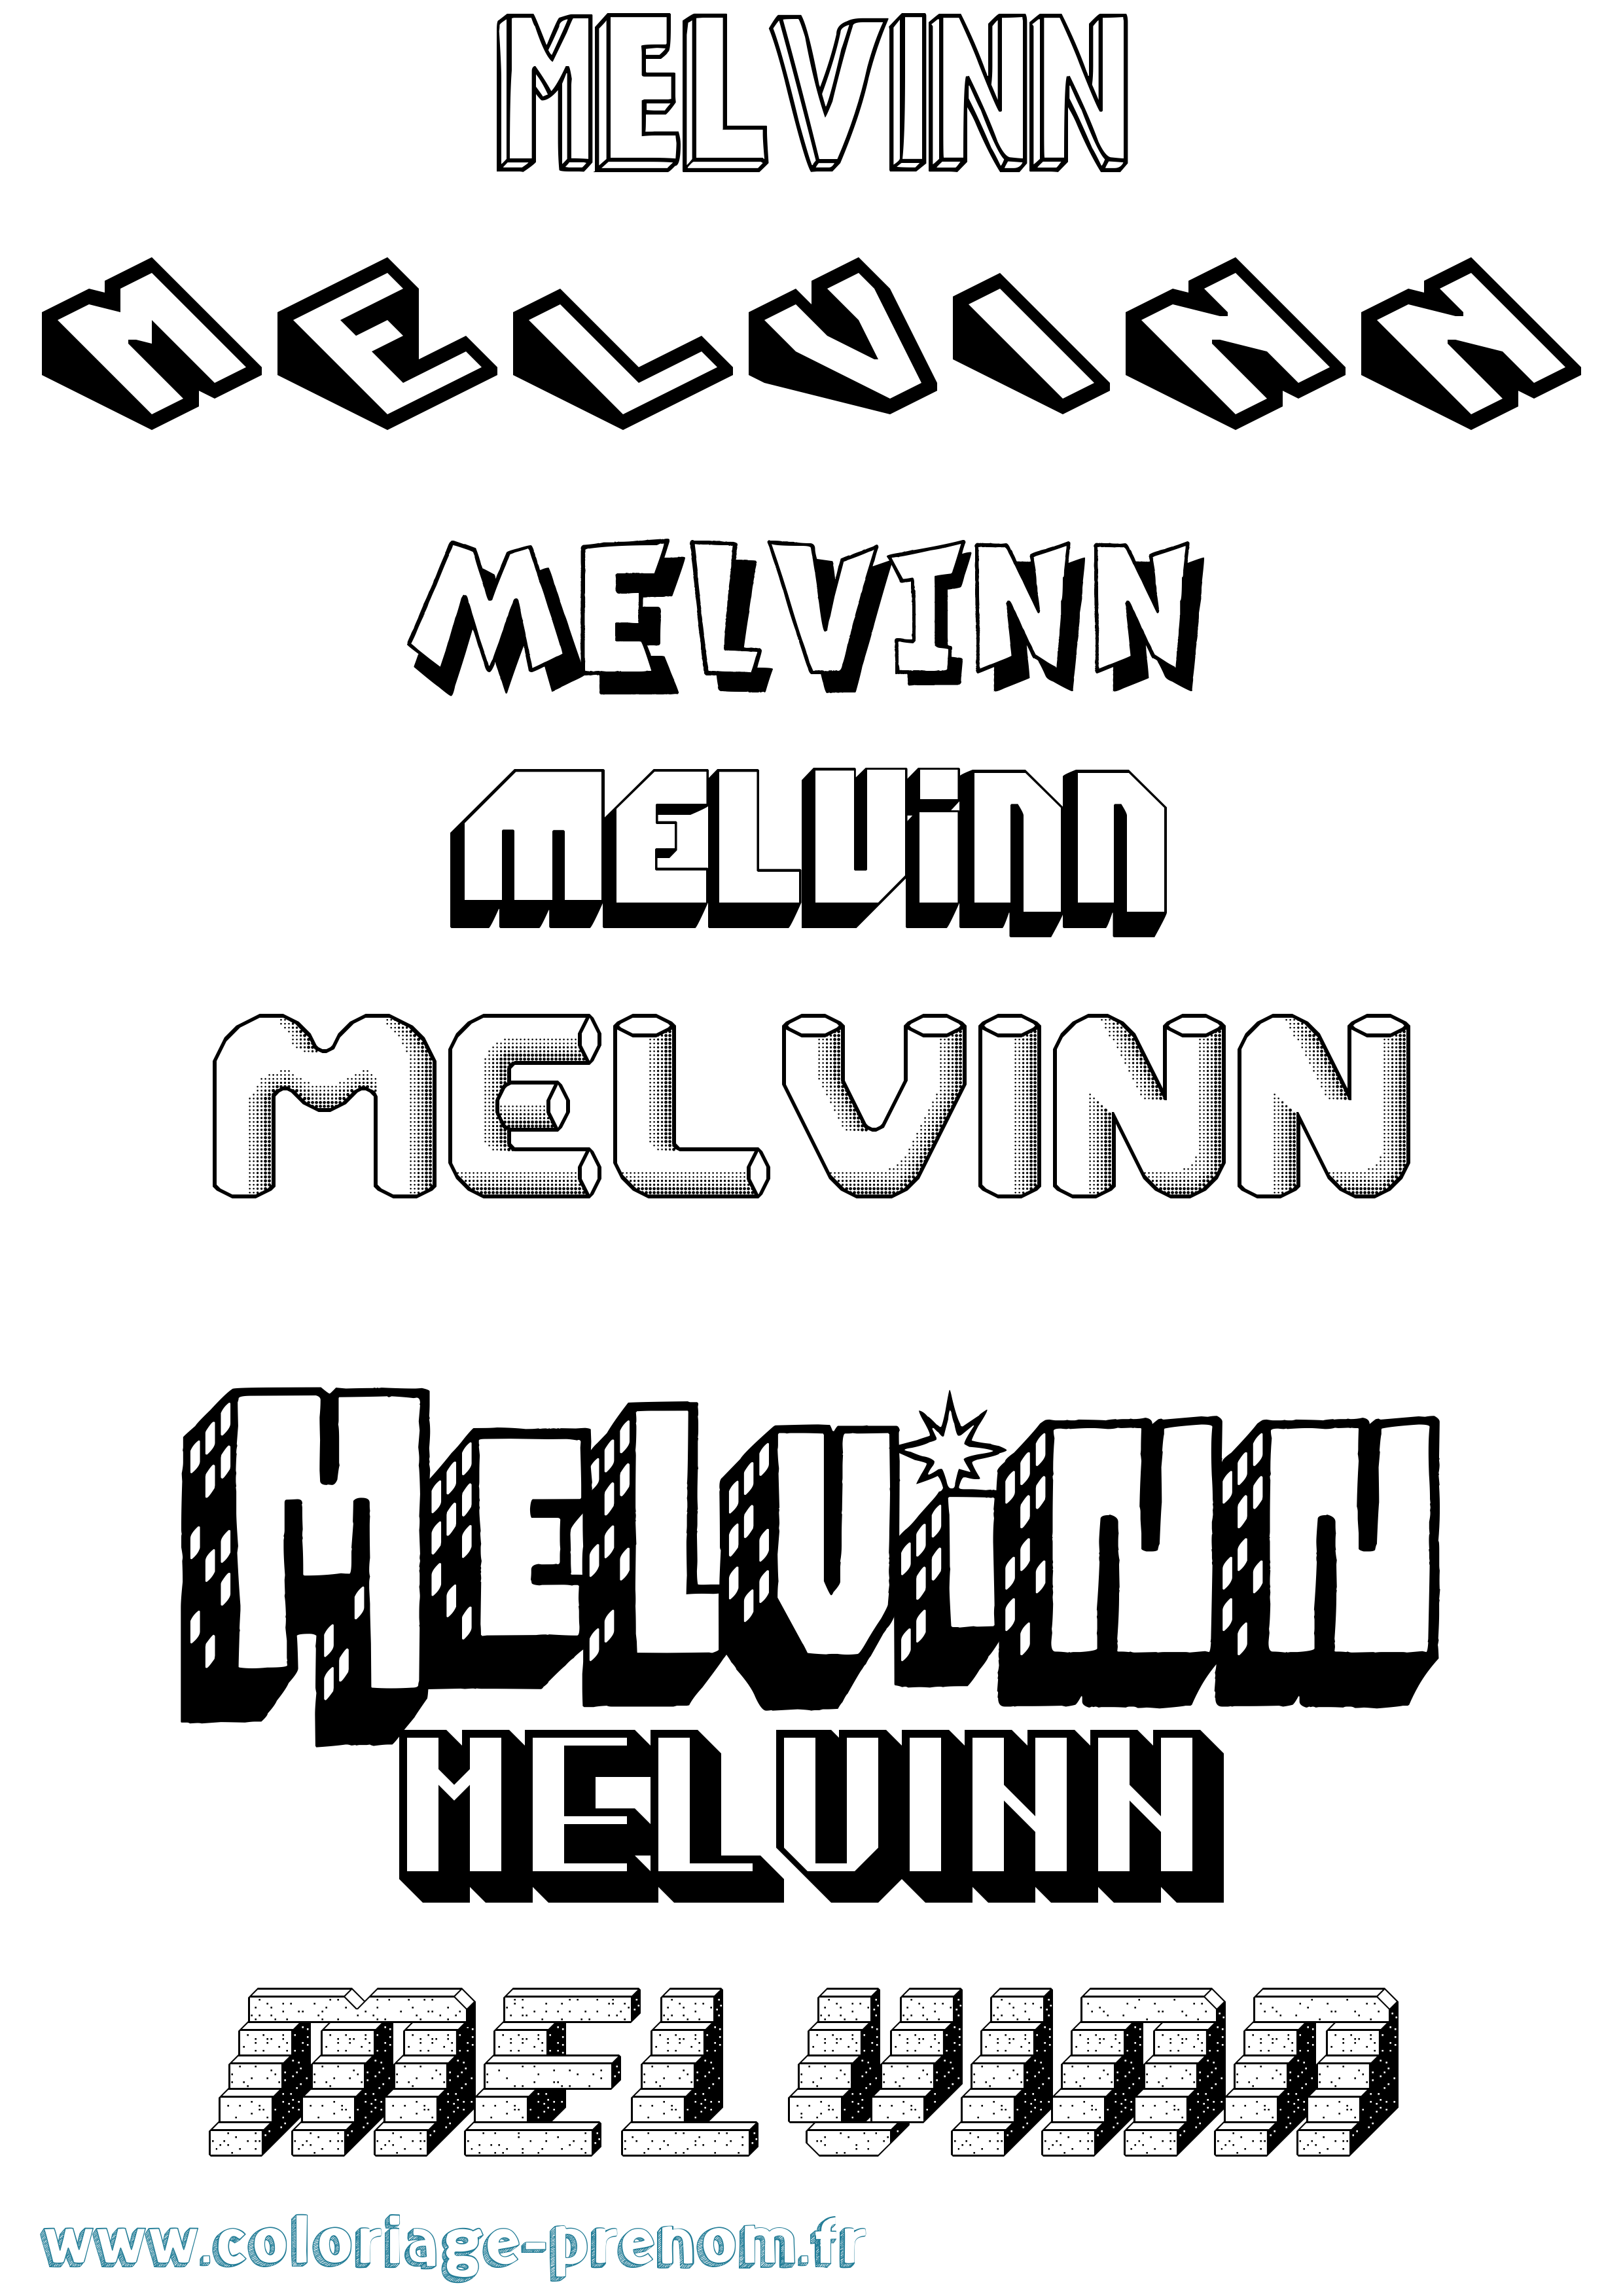 Coloriage prénom Melvinn Effet 3D